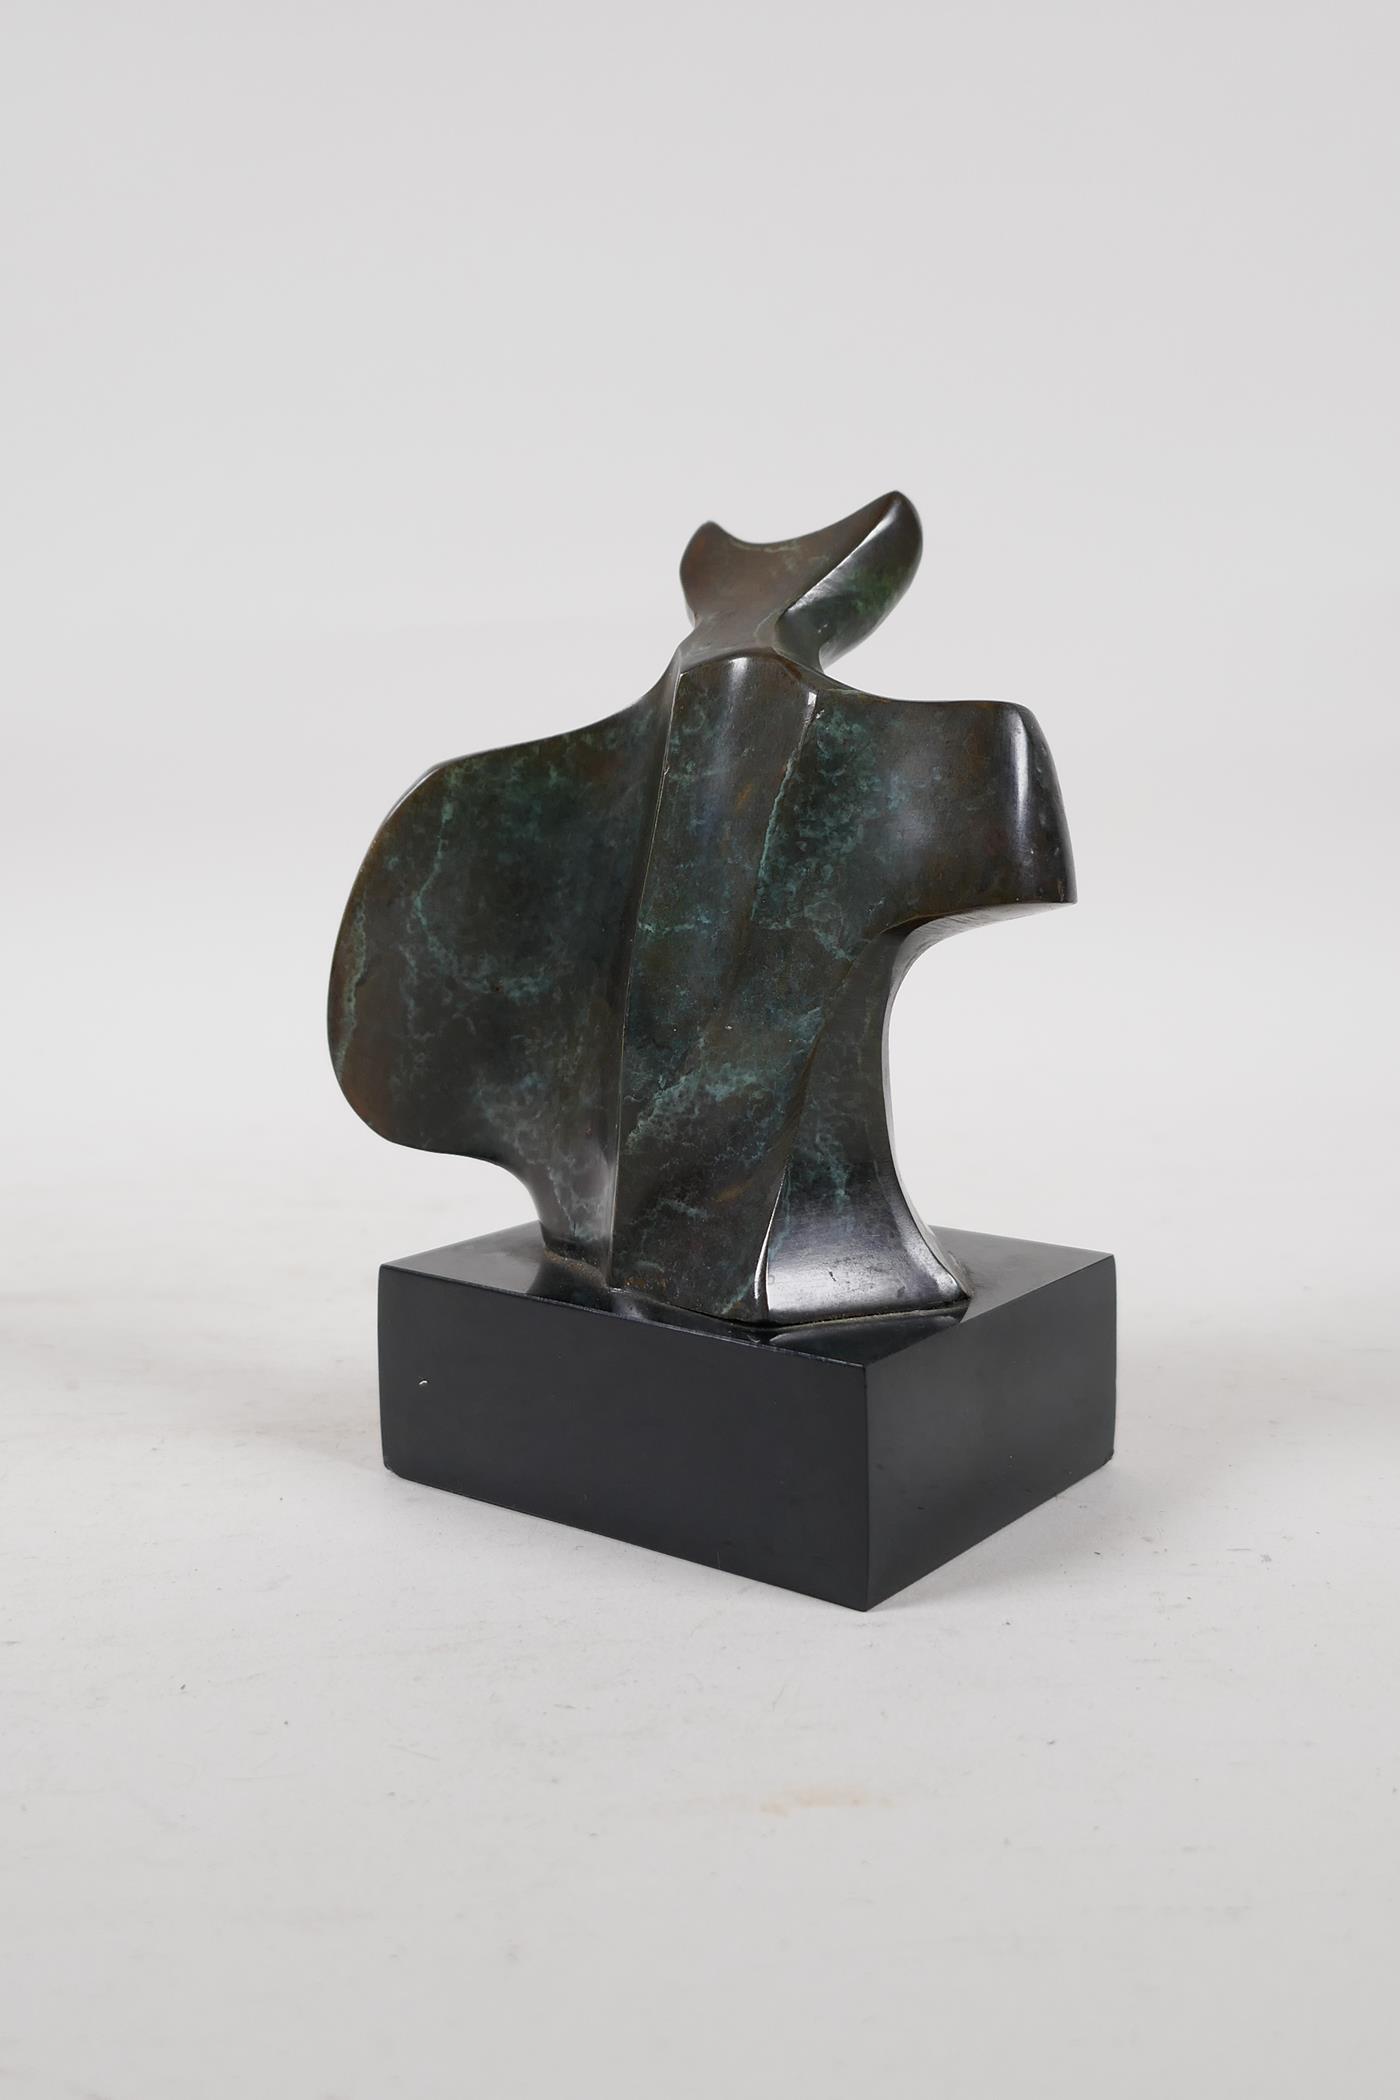 A modernist figural bronze sculpture, 5" high - Image 4 of 5